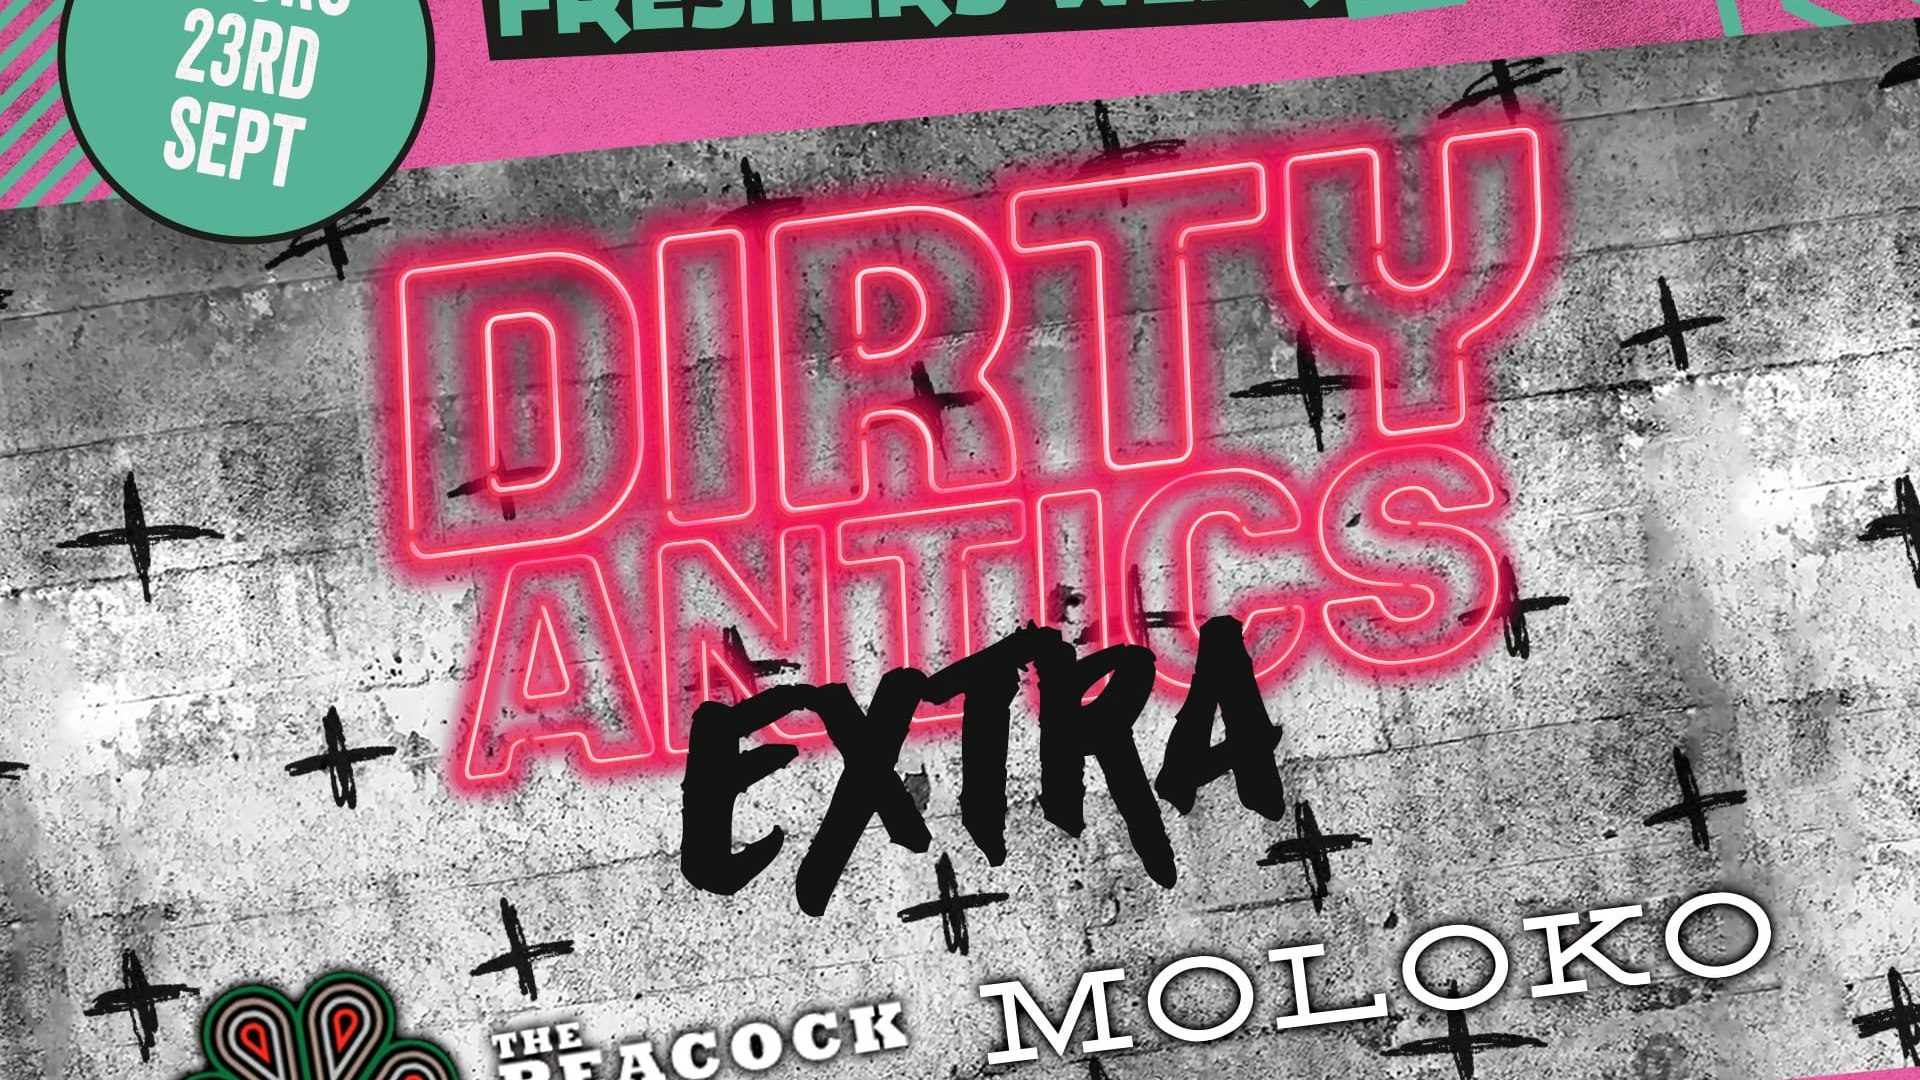 Dirty Antics EXTRA // Peacock & Moloko